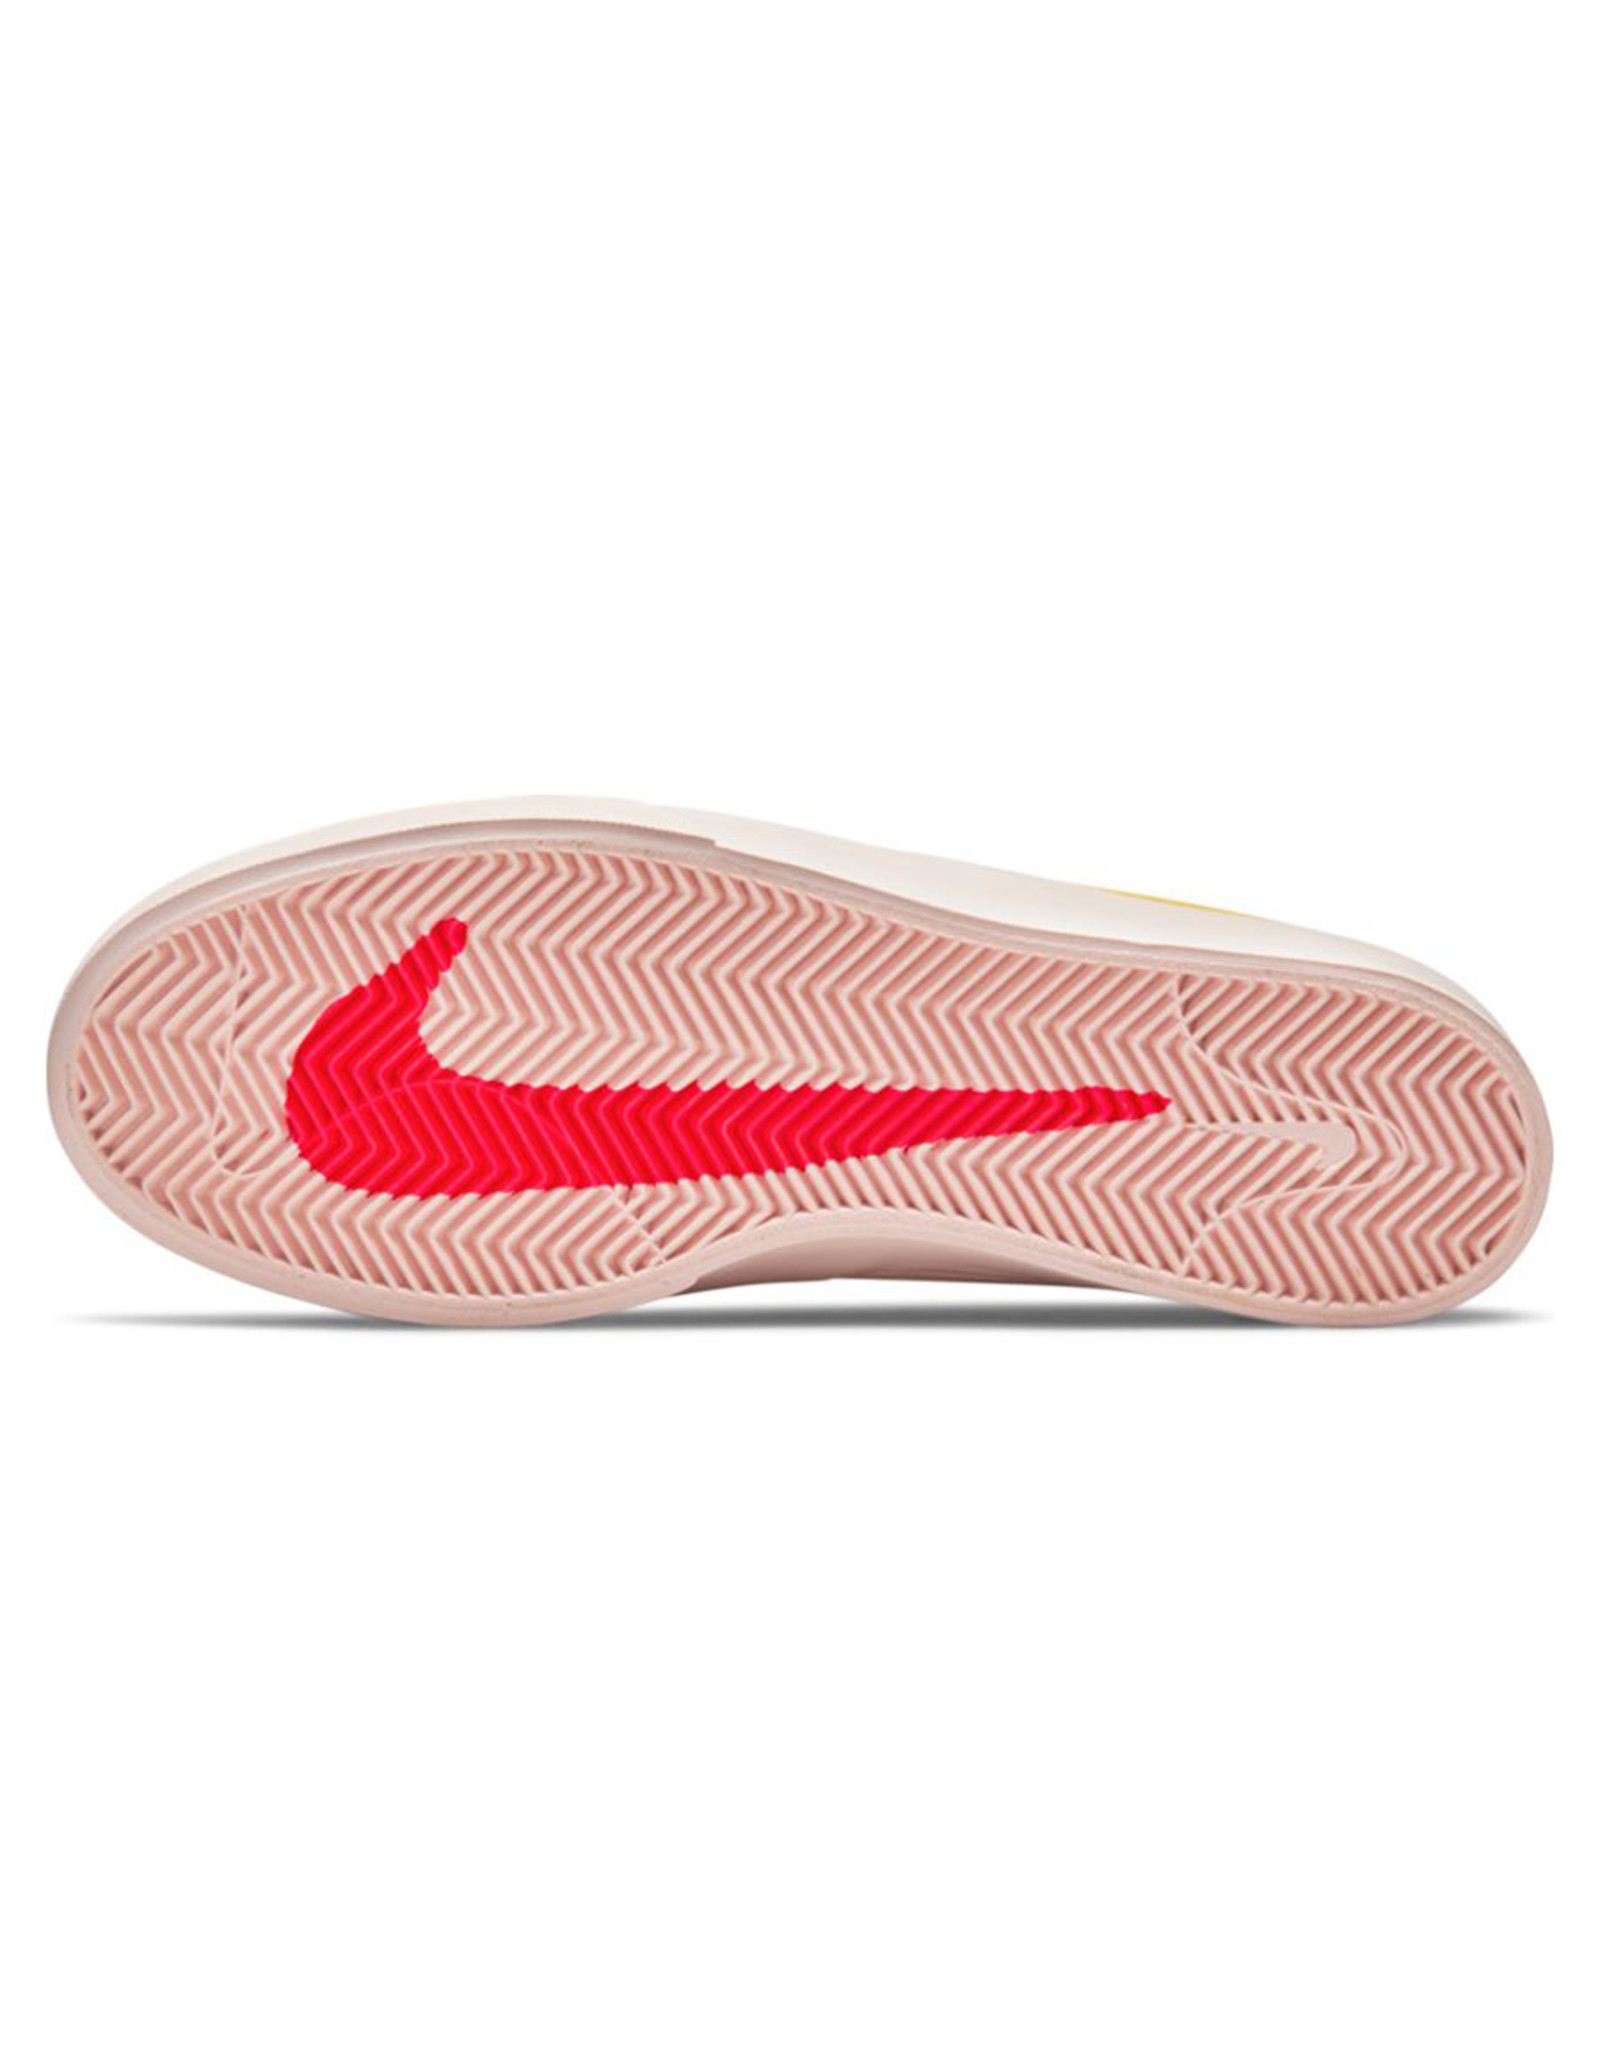 Nike SB Nike SB Shoe Shane (Pollen/Black/Coral)